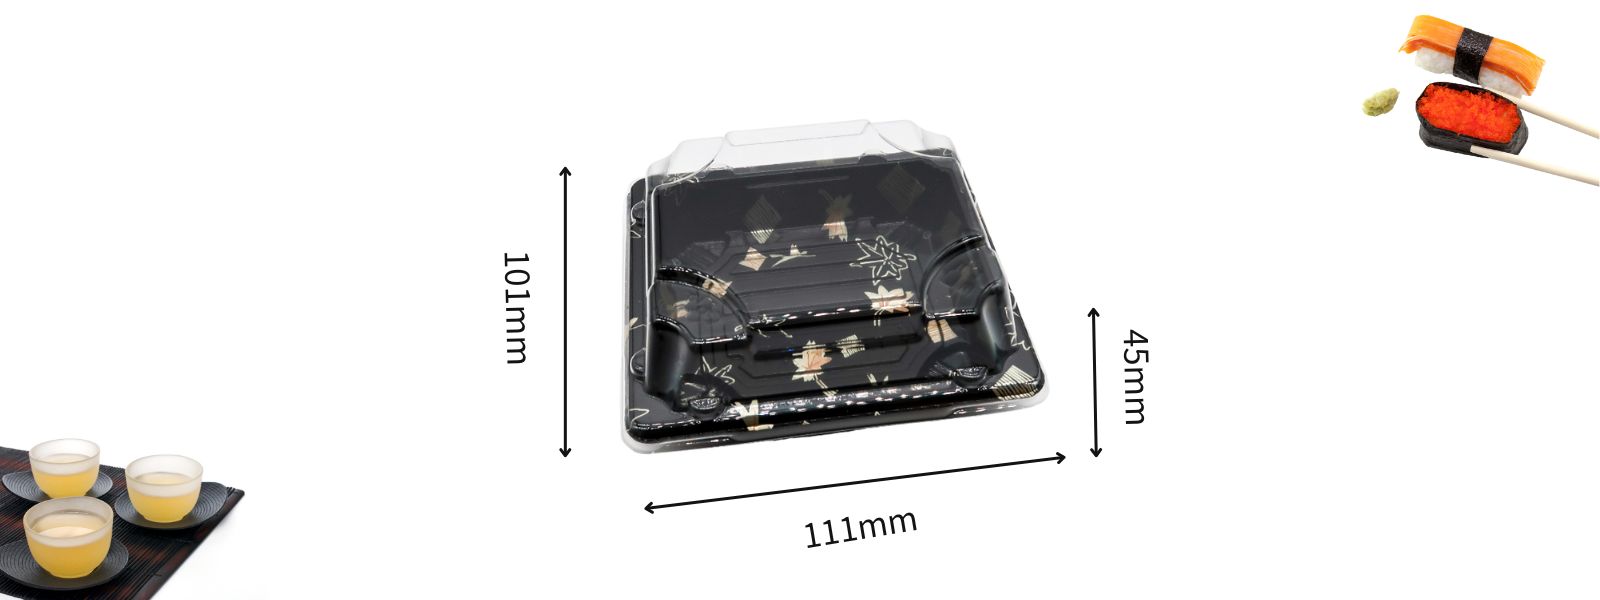 WL-0.1 small sushi box size : 111*101*45mm